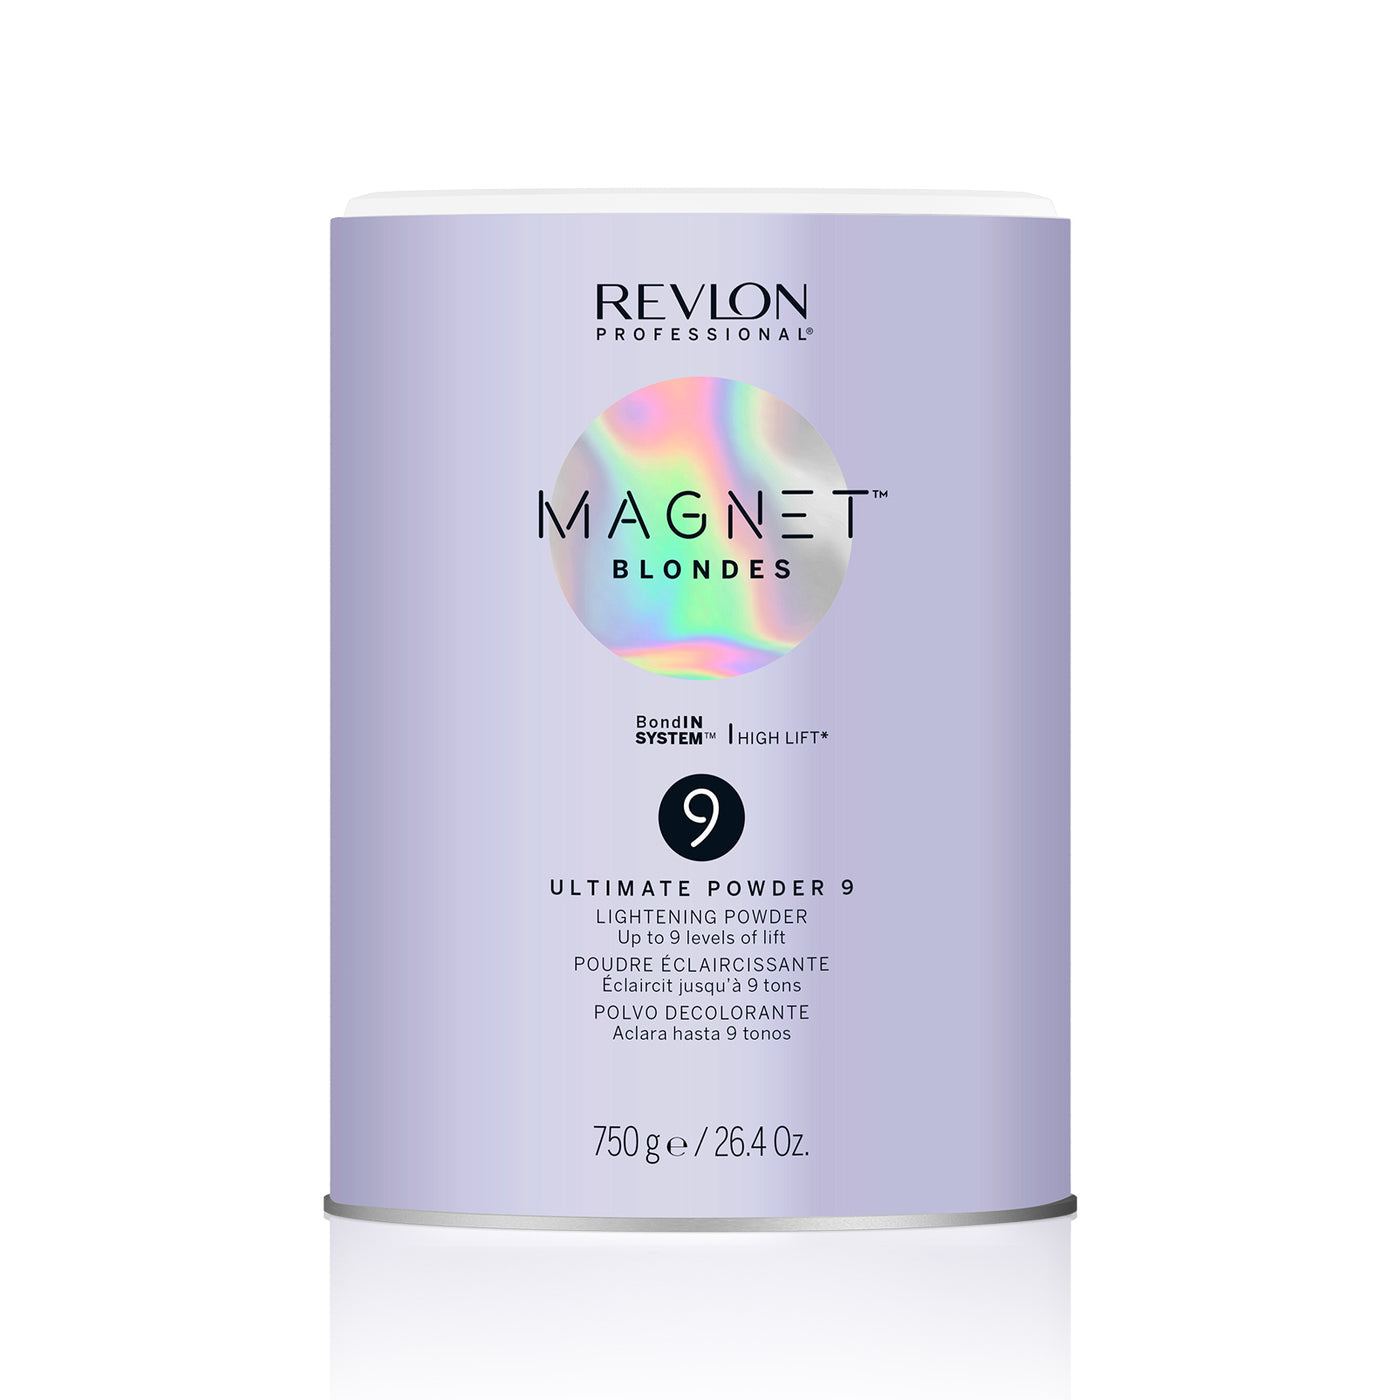 Revlon Professional Magnet™ Blondes Ultimate Powder